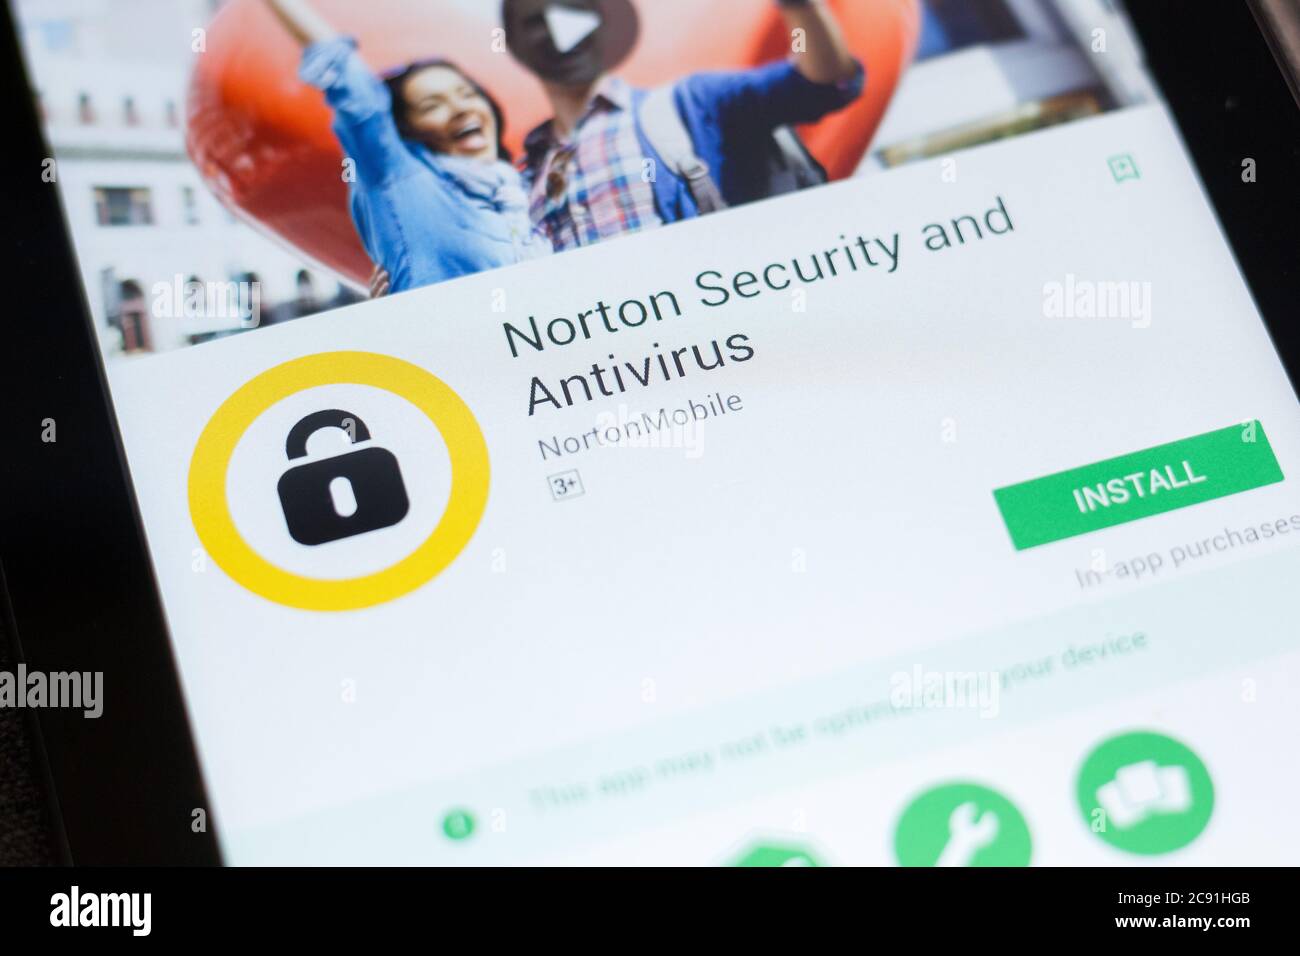 norton mobile security app